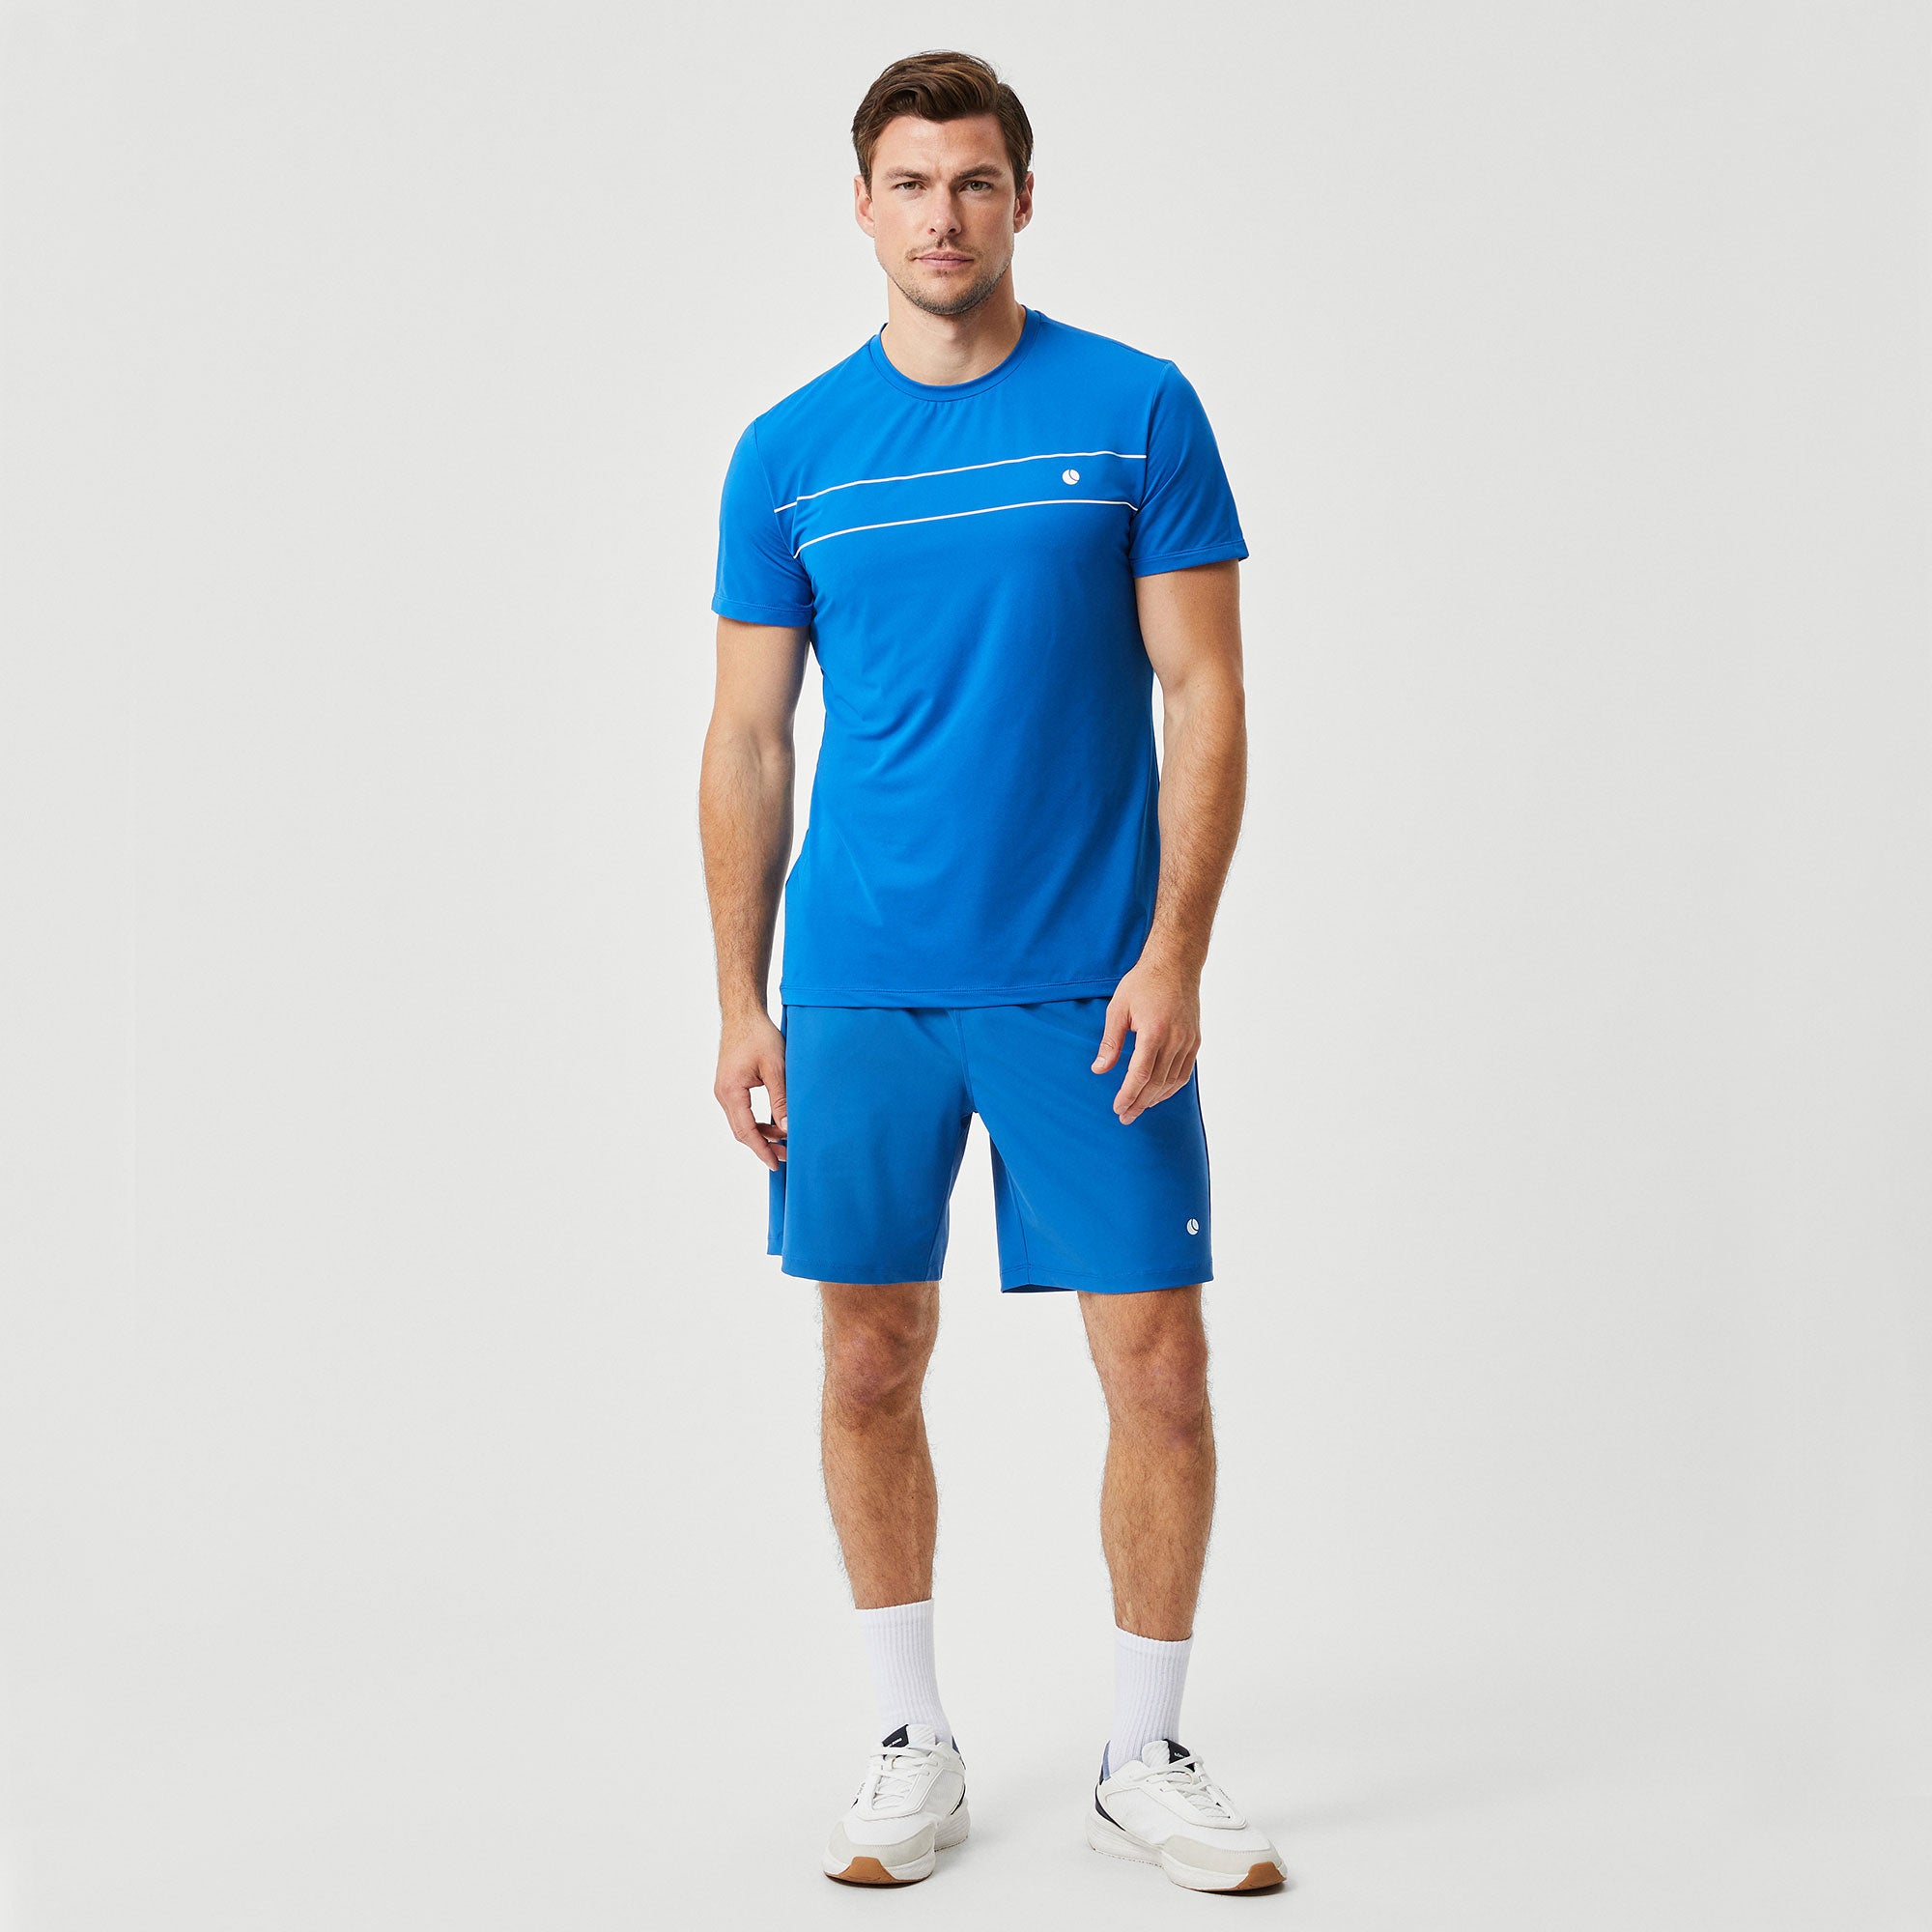 Björn Borg Ace Men's Light Tennis Shirt - Blue (4)